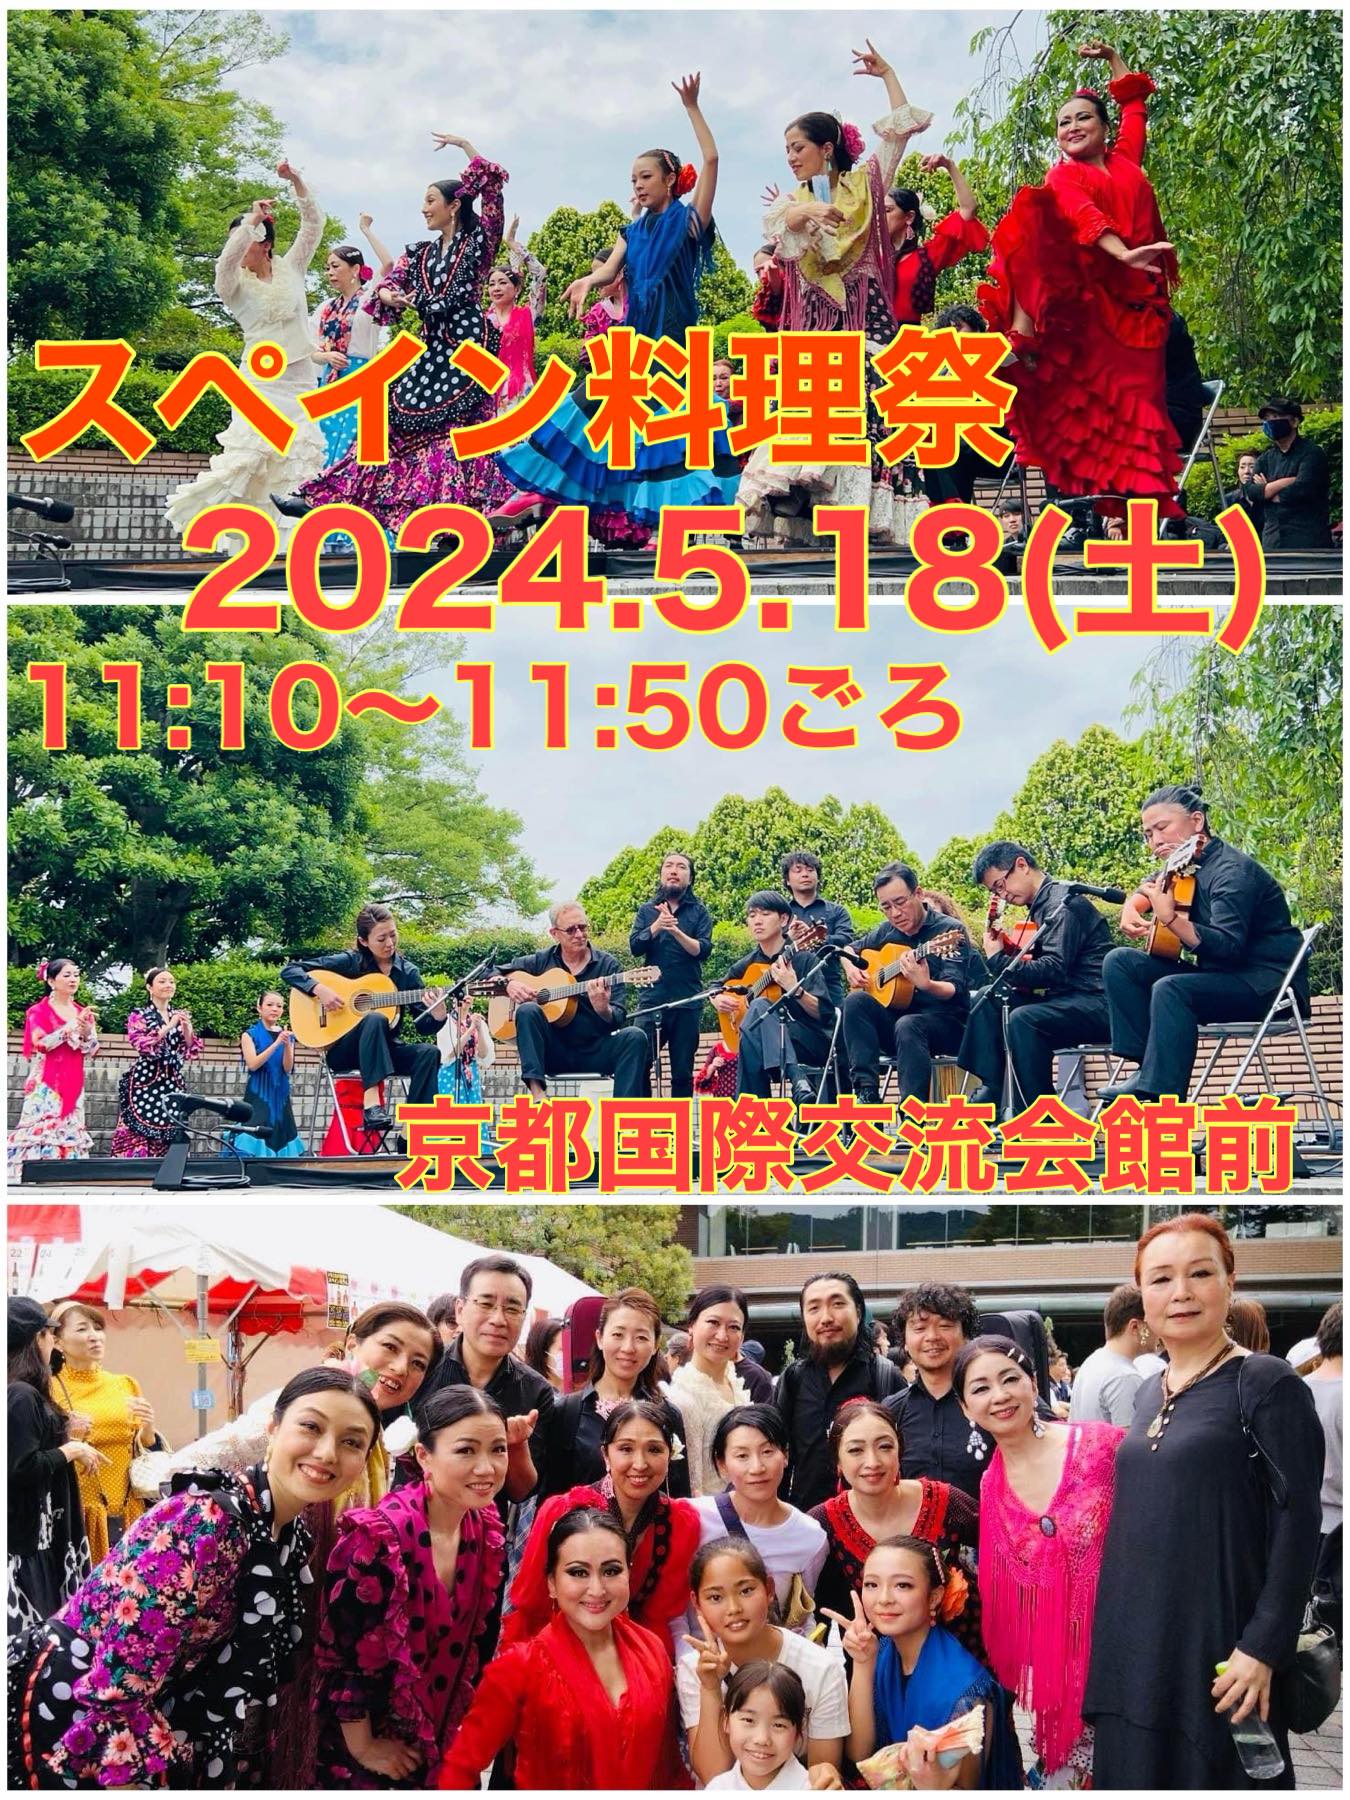 2024.5.18（土）京都国際交流会館前　「スペイン料理祭」